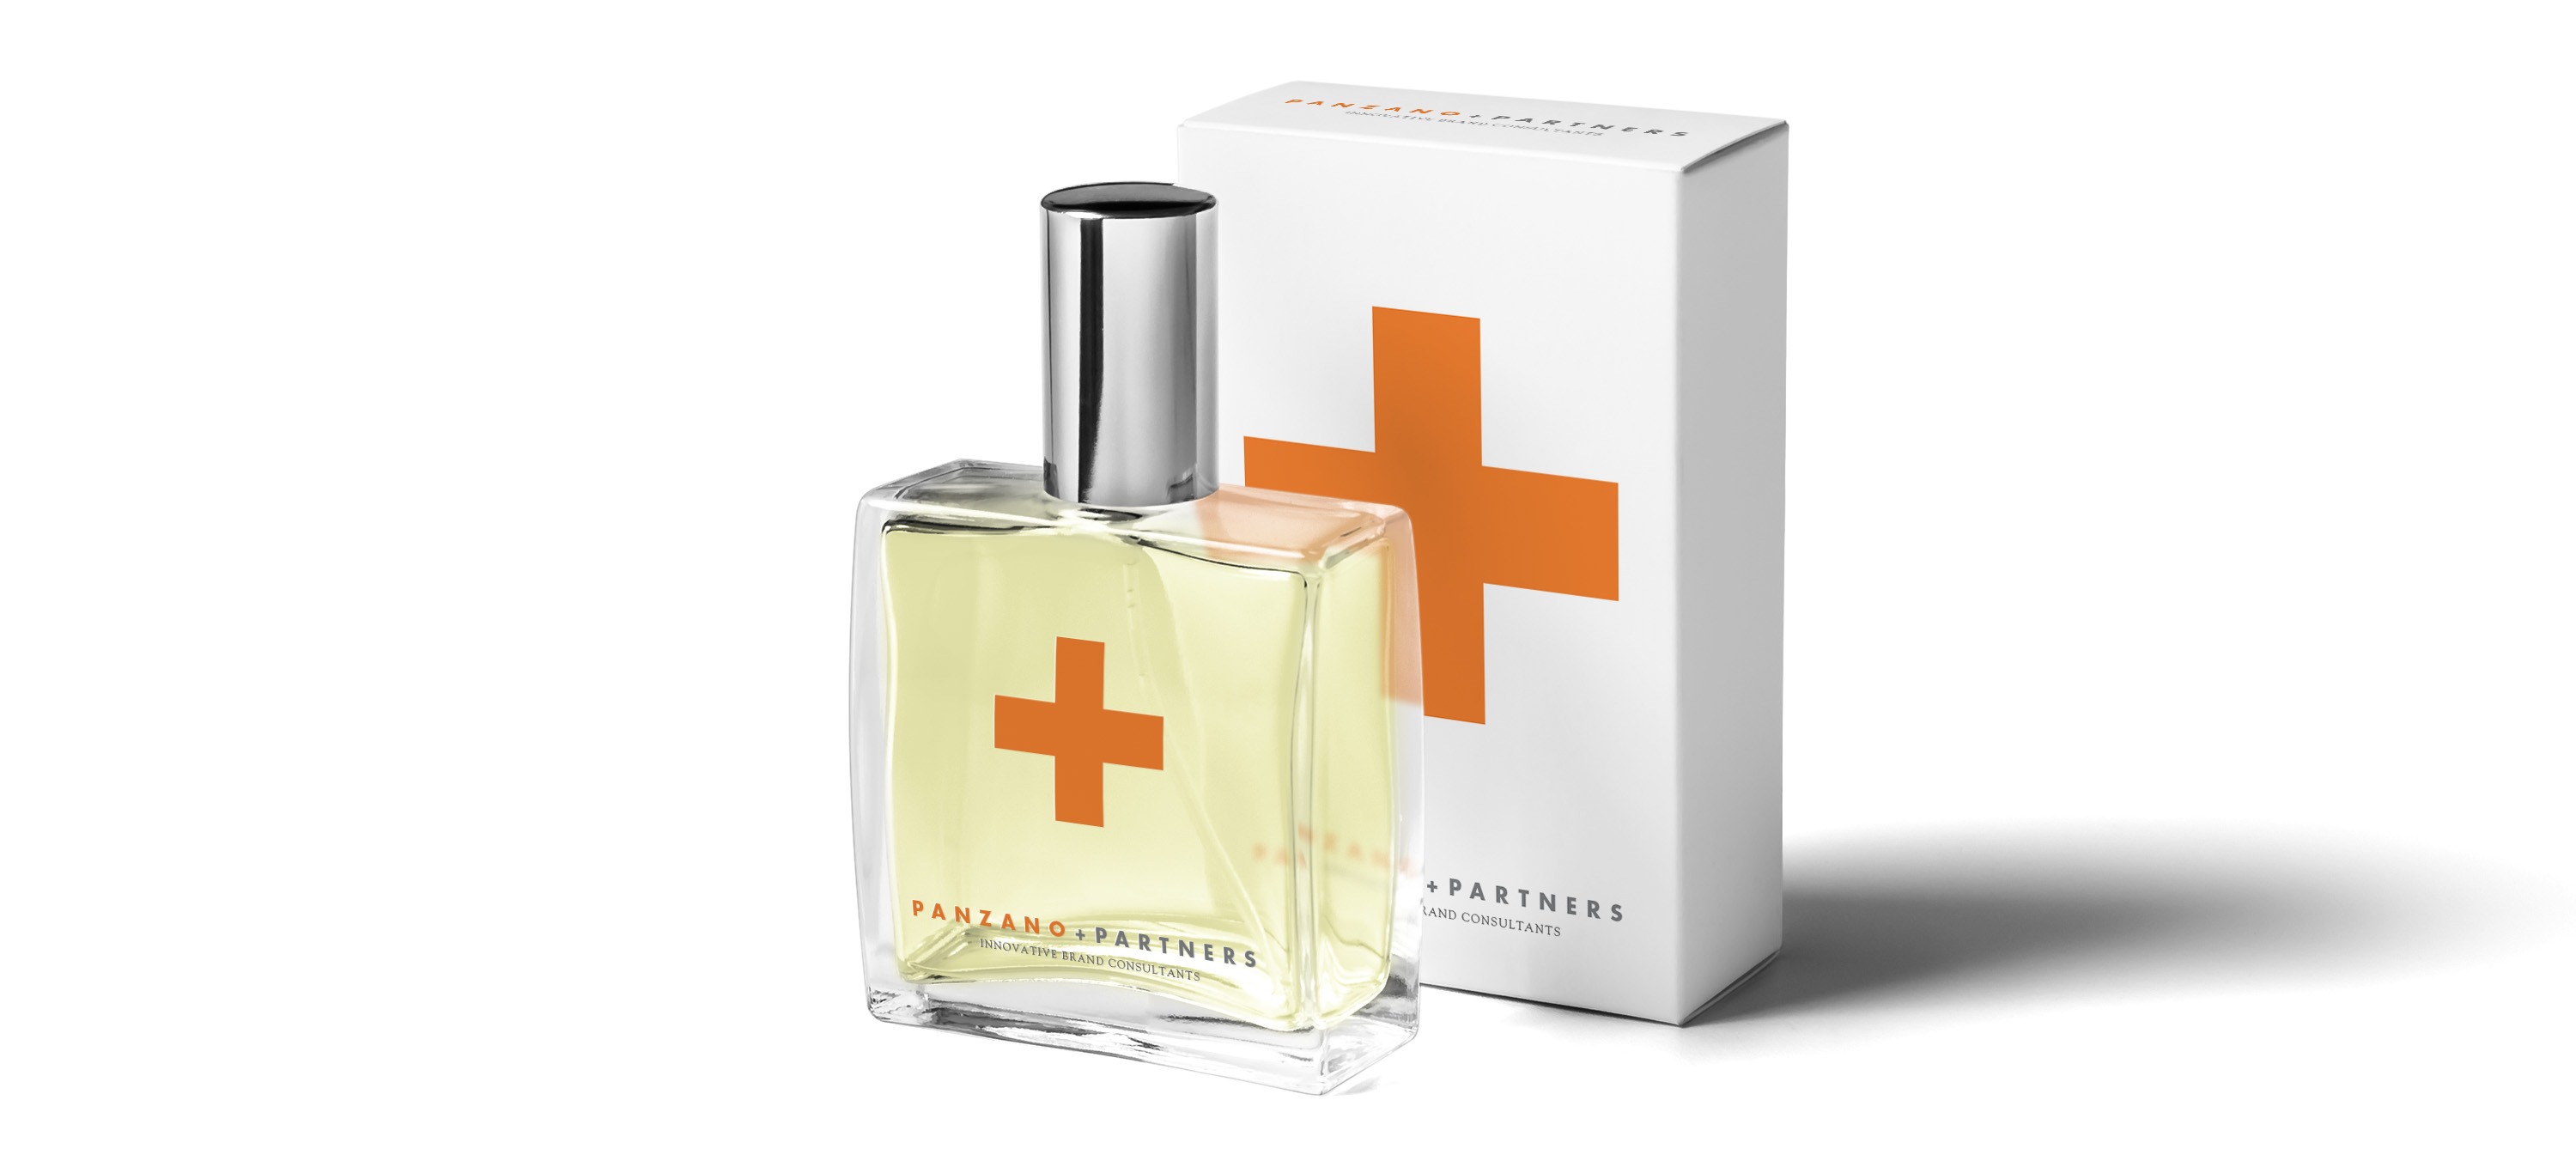 Panzano mark on perfume bottle and box